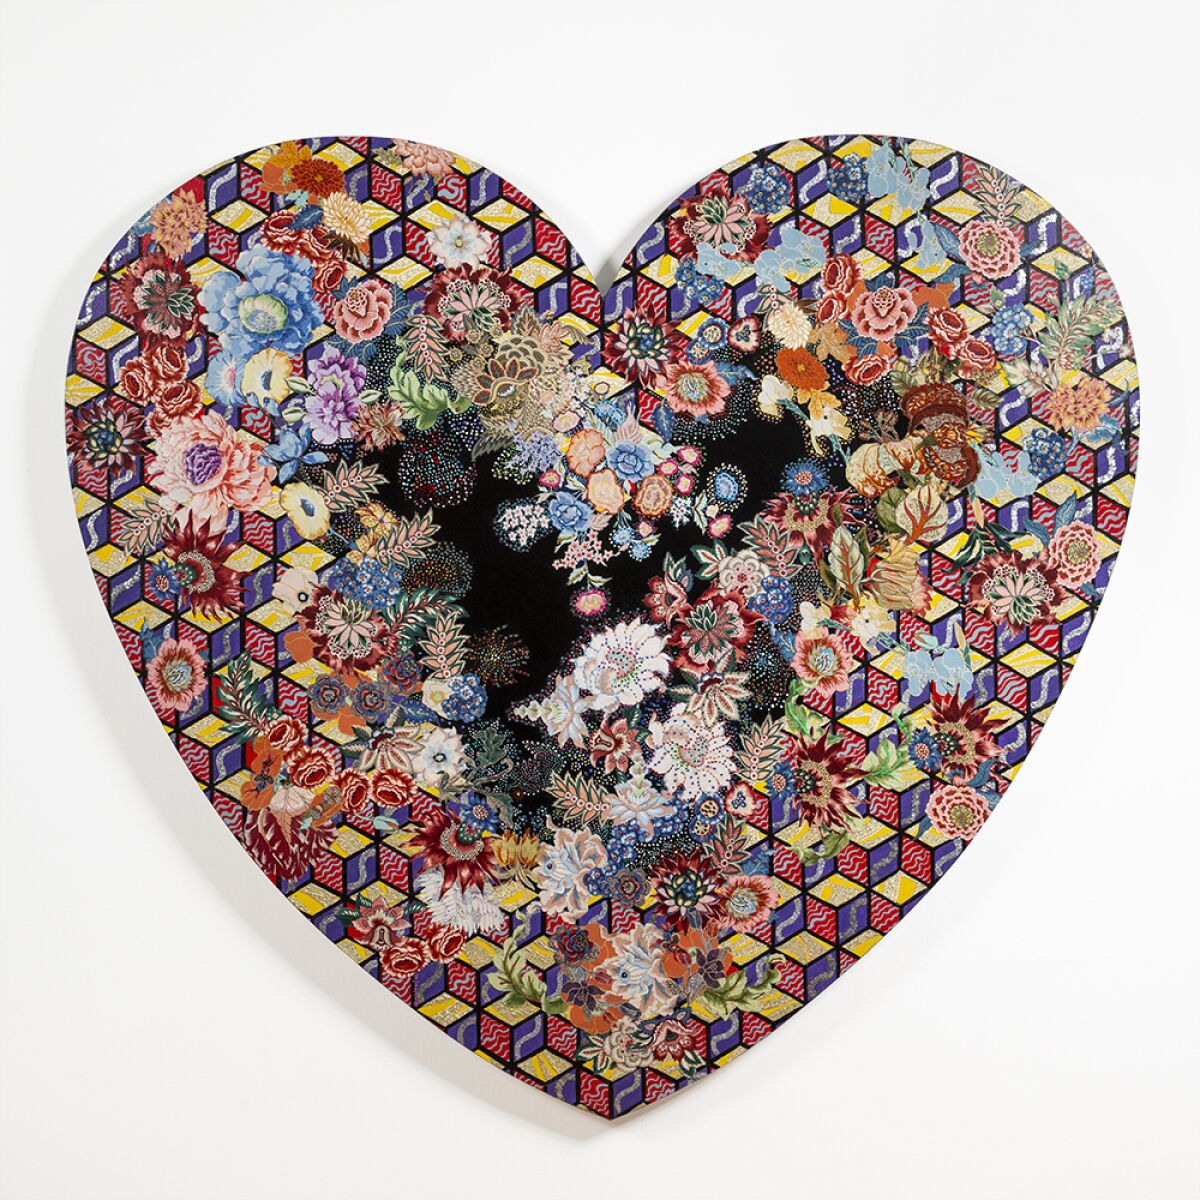 Miriam Schapiro, "Heartland," 1985; acrylic, fabric, glitter on canvas.